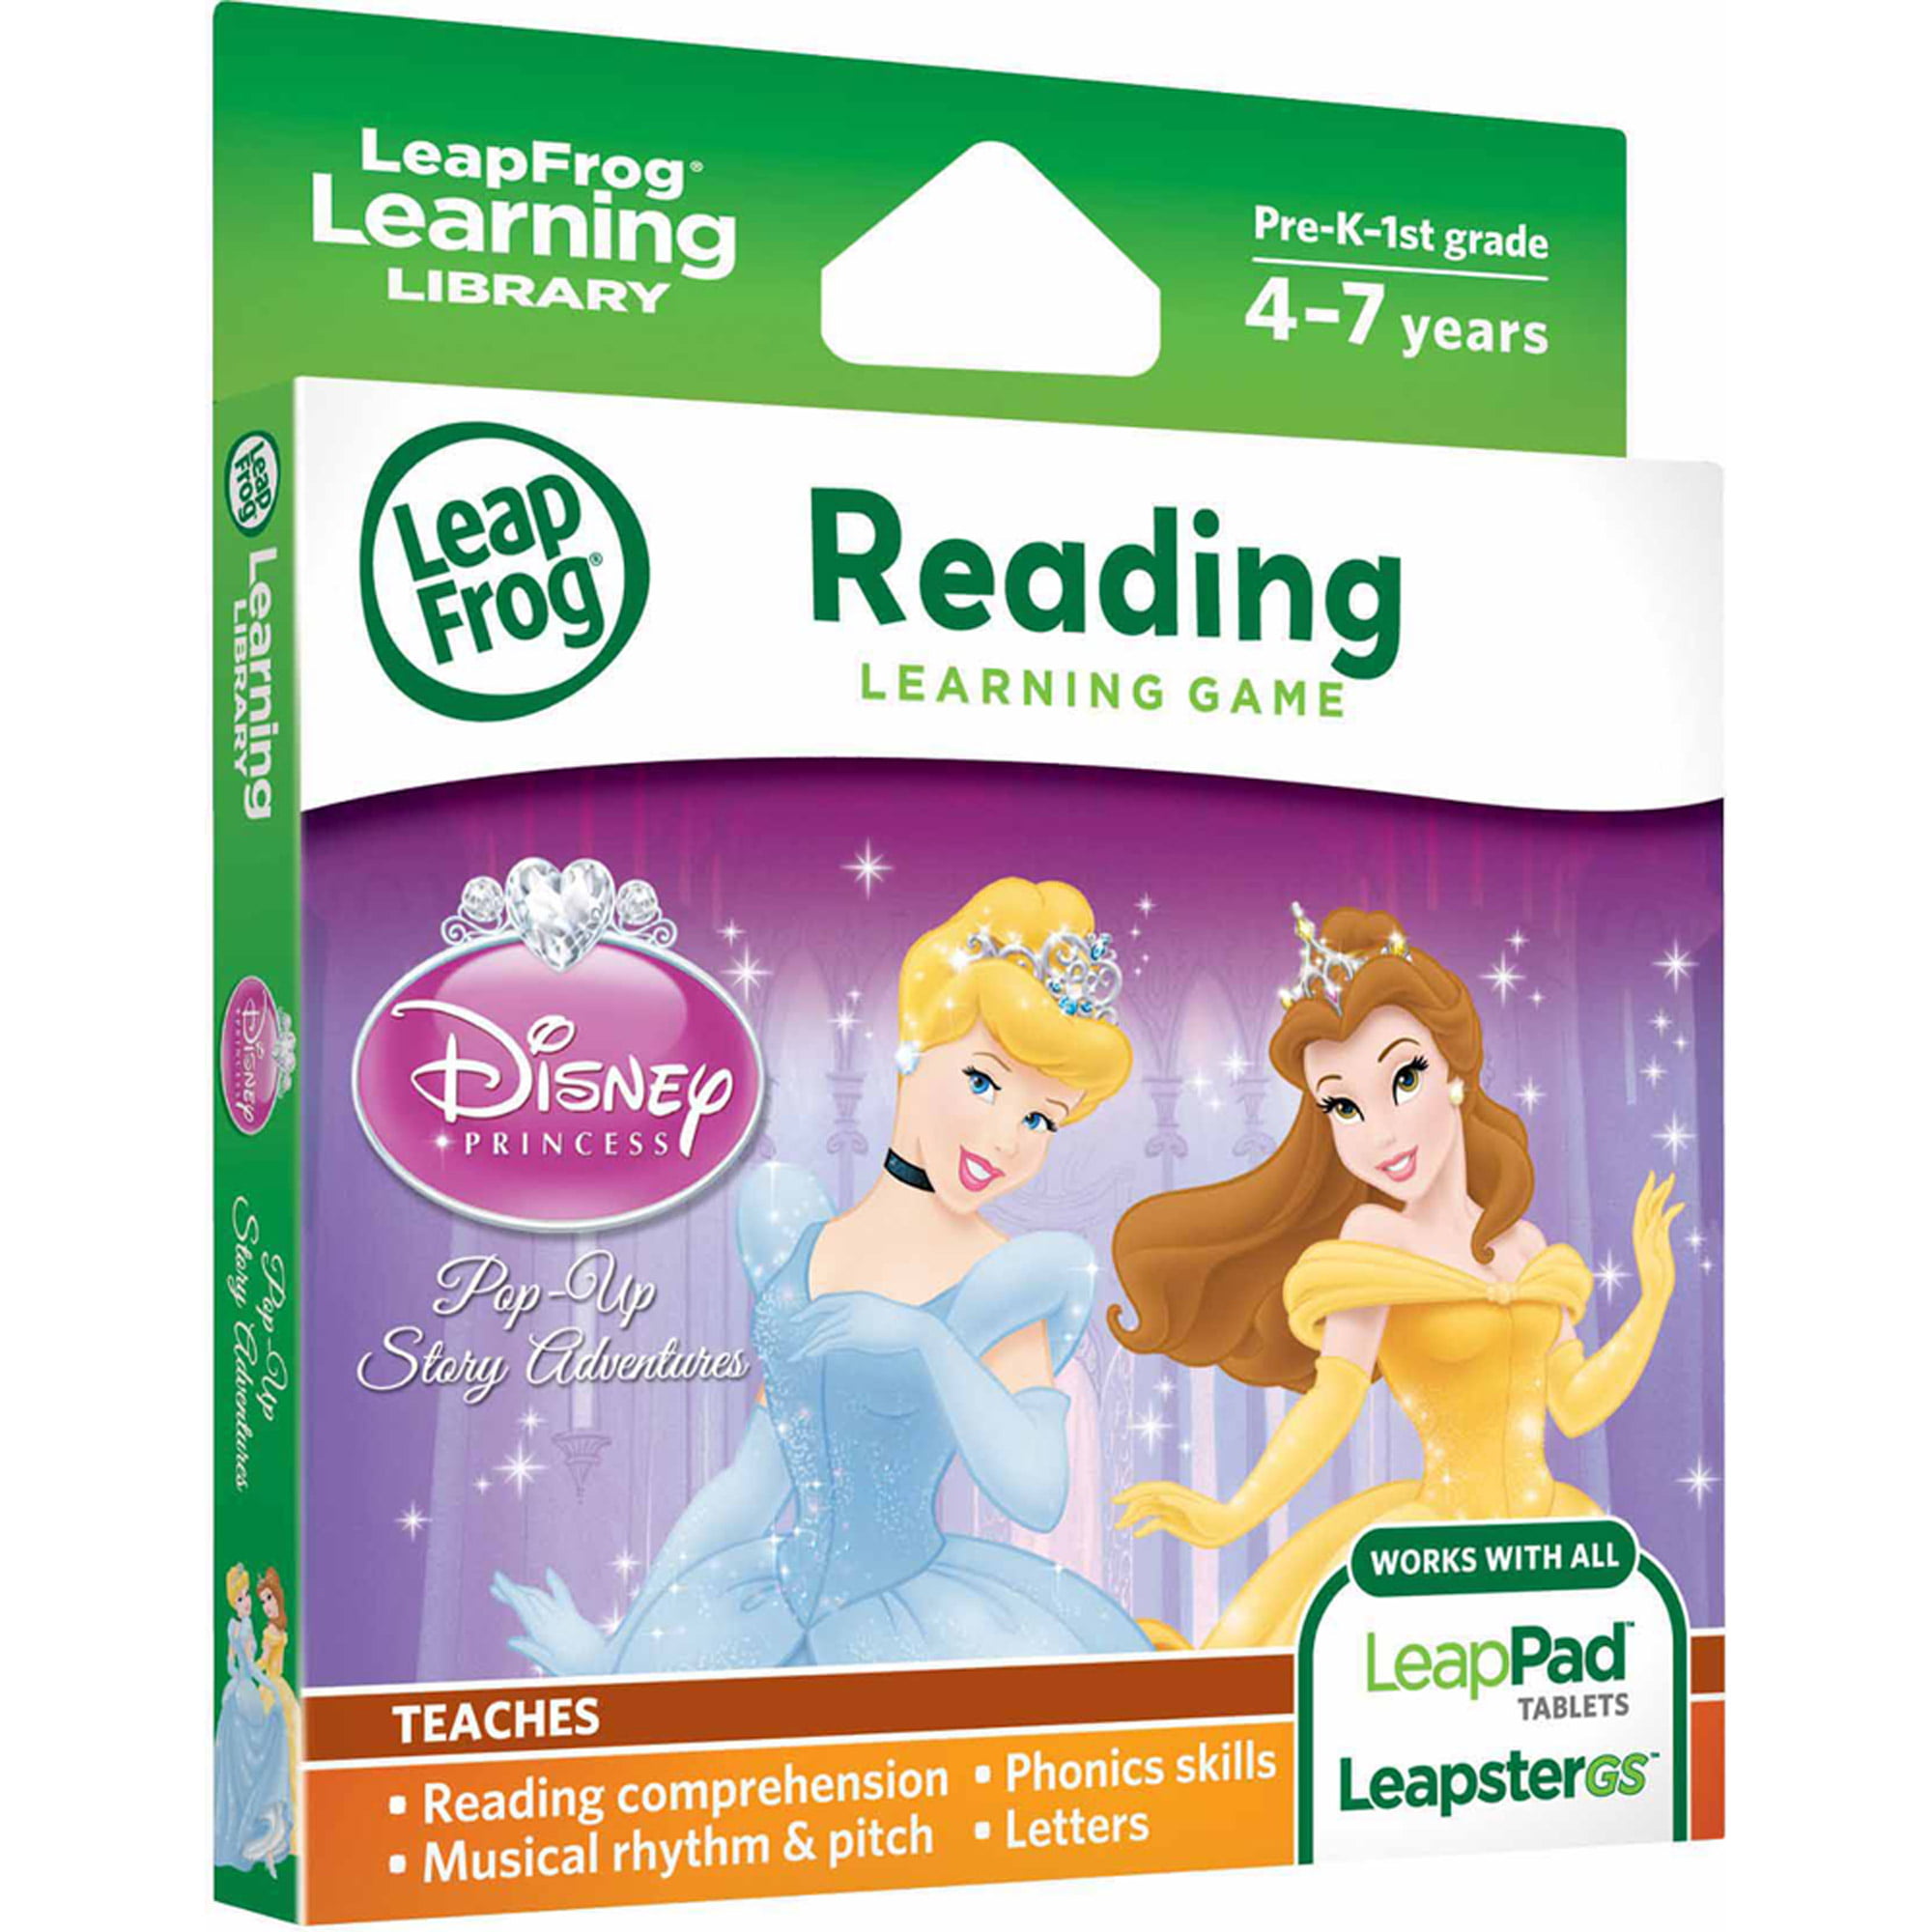 Reading Learning Game Cartridge LeapFrog Leapster Kids Education Disney Princess